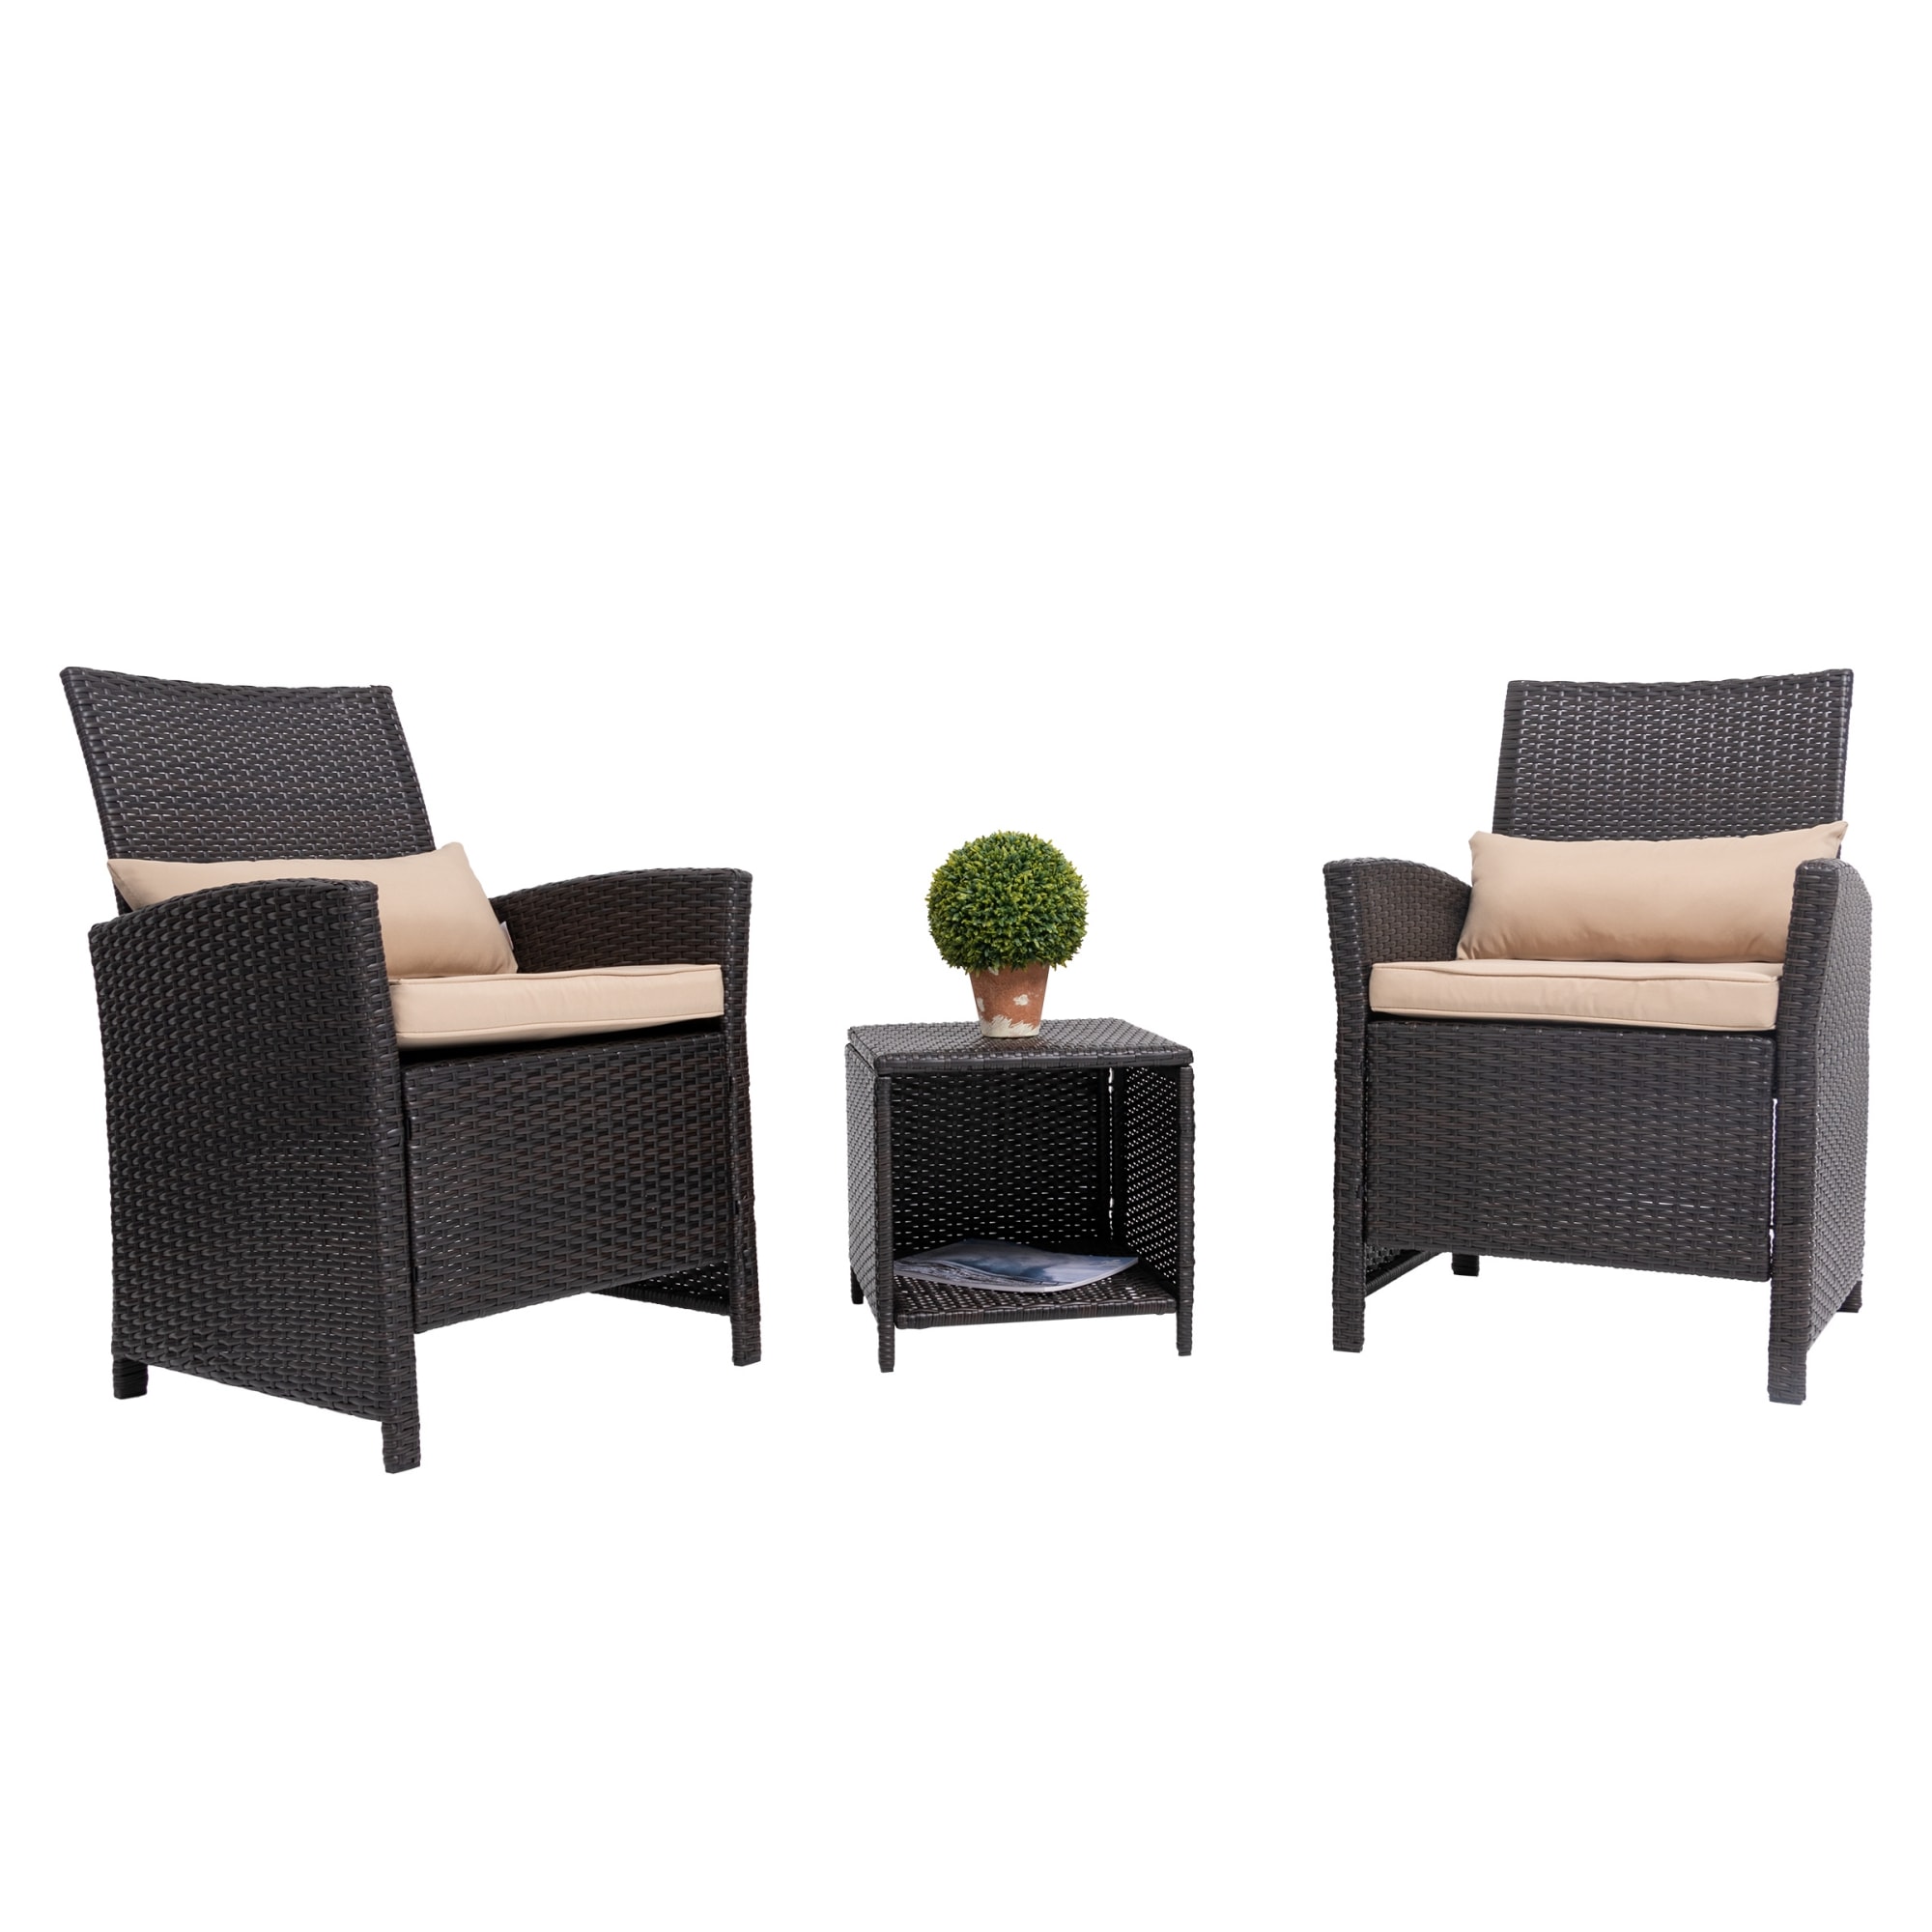 3 Piece Wicker Patio Bistro Set Sofa Conversation Sets Outdoor Furniture Brown 